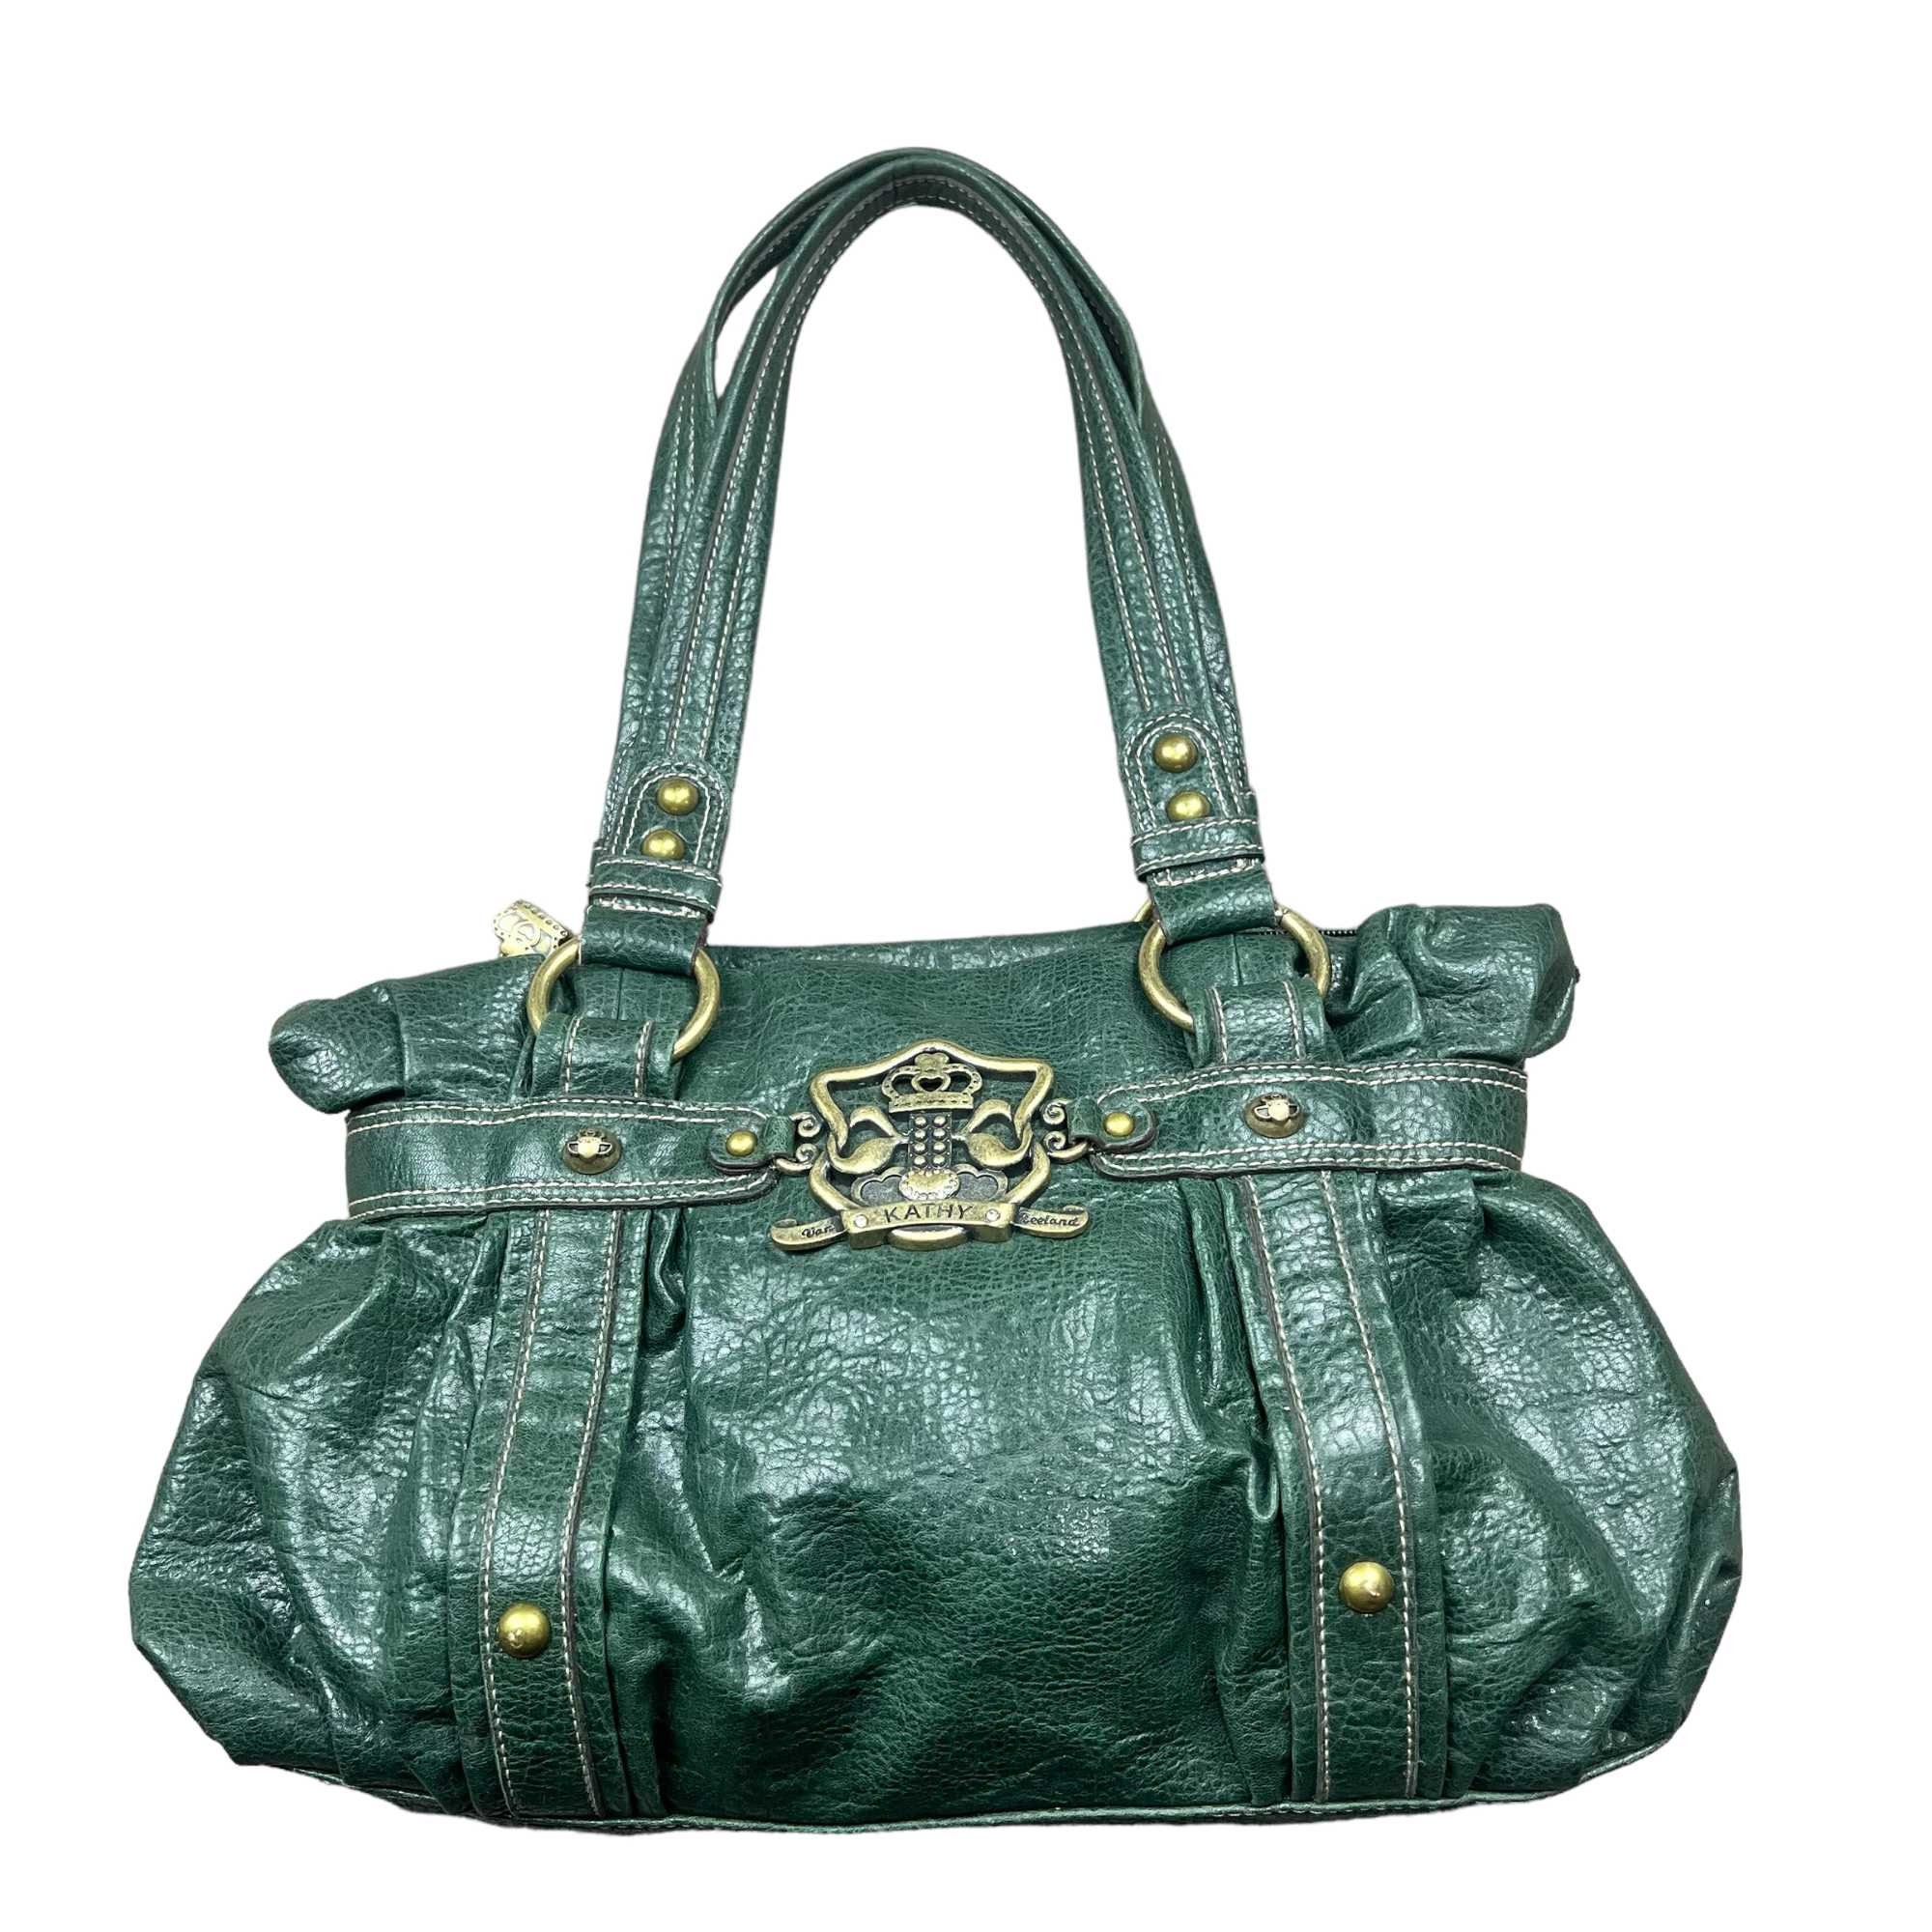 Kathy Van Zeeland Vintage Bag - Women's handbags